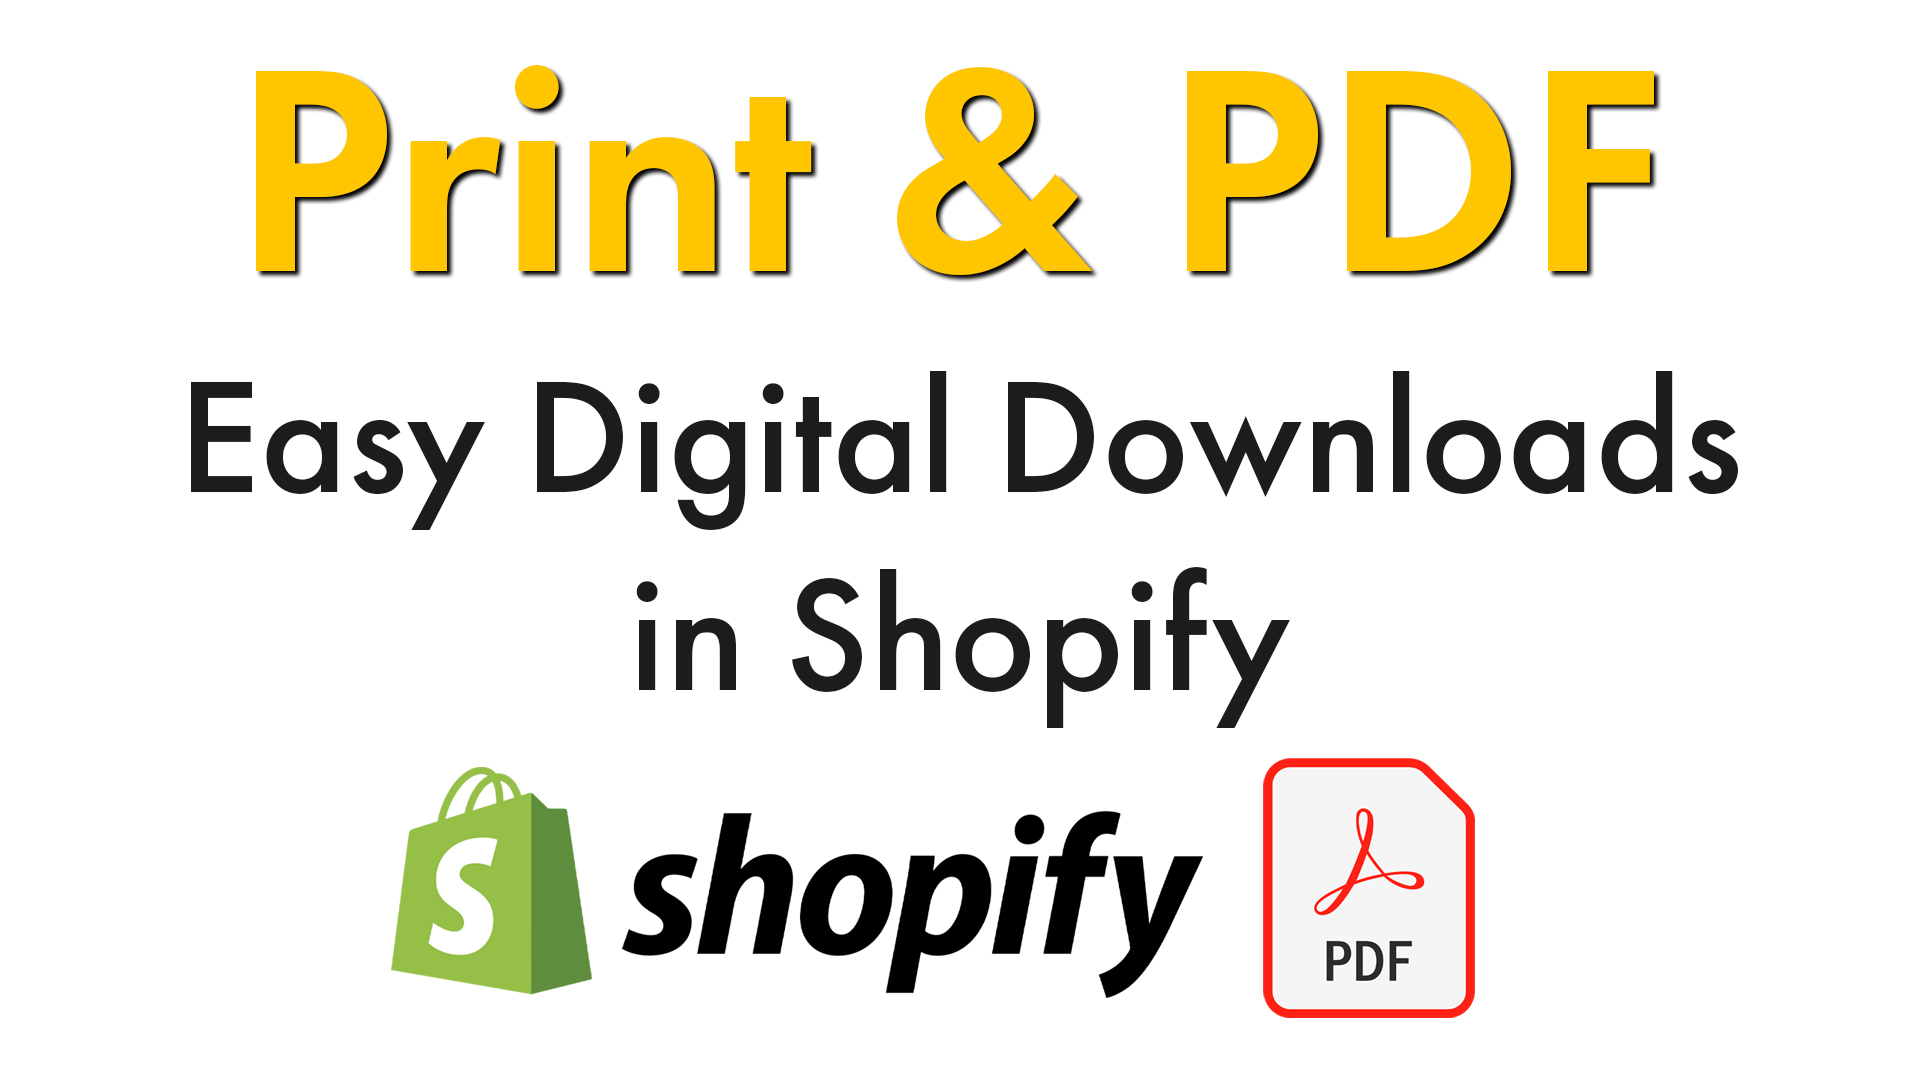 Print & PDF: Easy Digital Downloads in Shopify